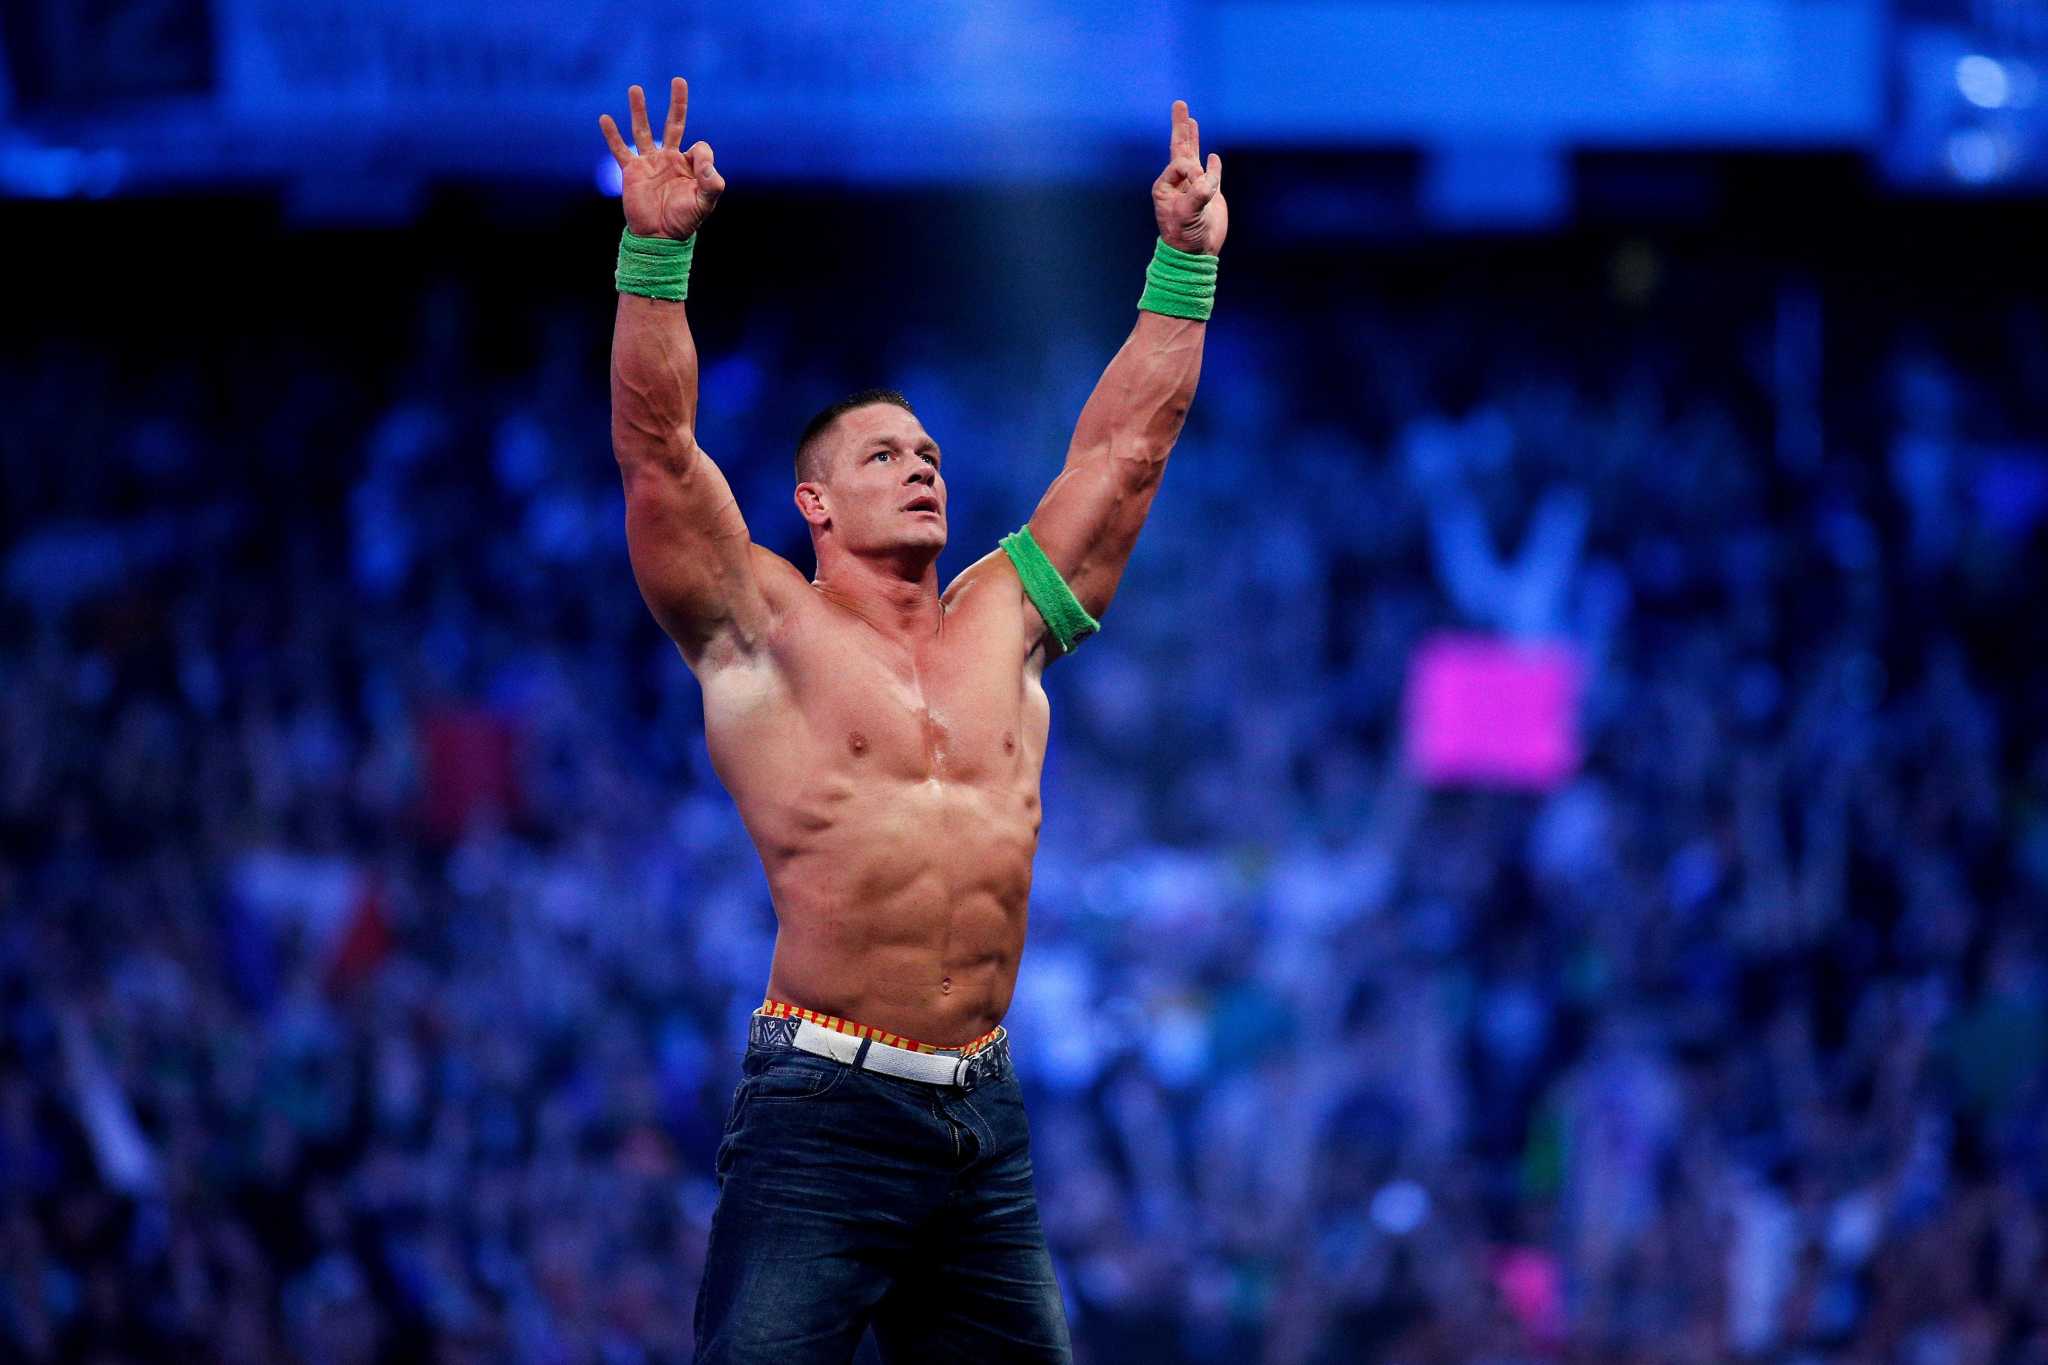 John Cena to appear at WWE RAW in Laredo